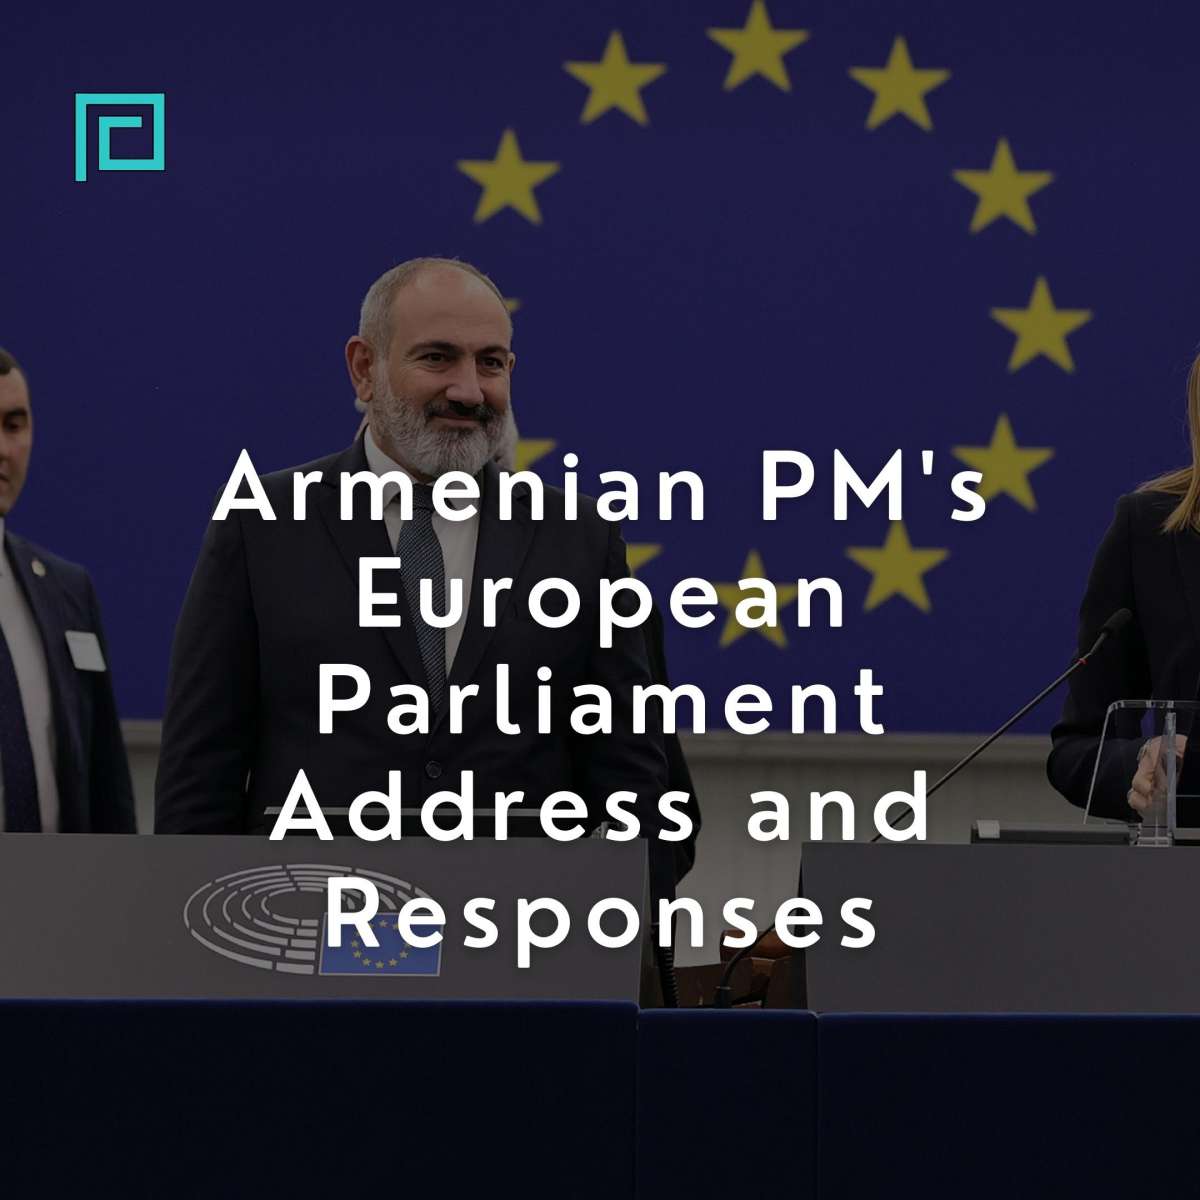 Armenian PM's European Parliament Address and Responses